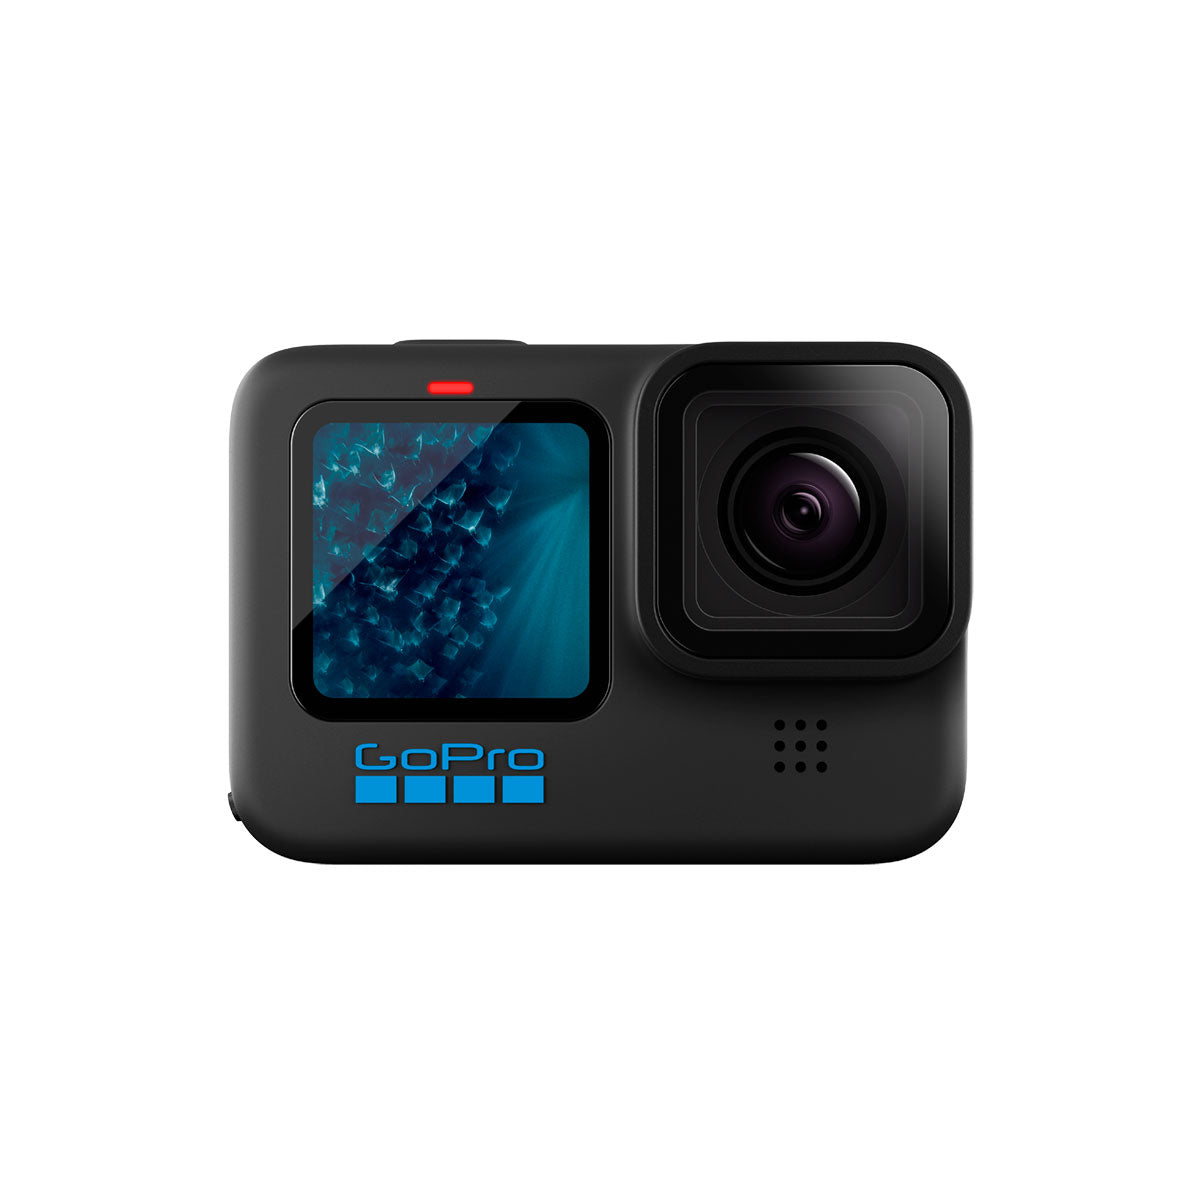 GoPro HERO11 BLACK Creator Edition 運動相機套裝 運動相機 Microworks Online Store